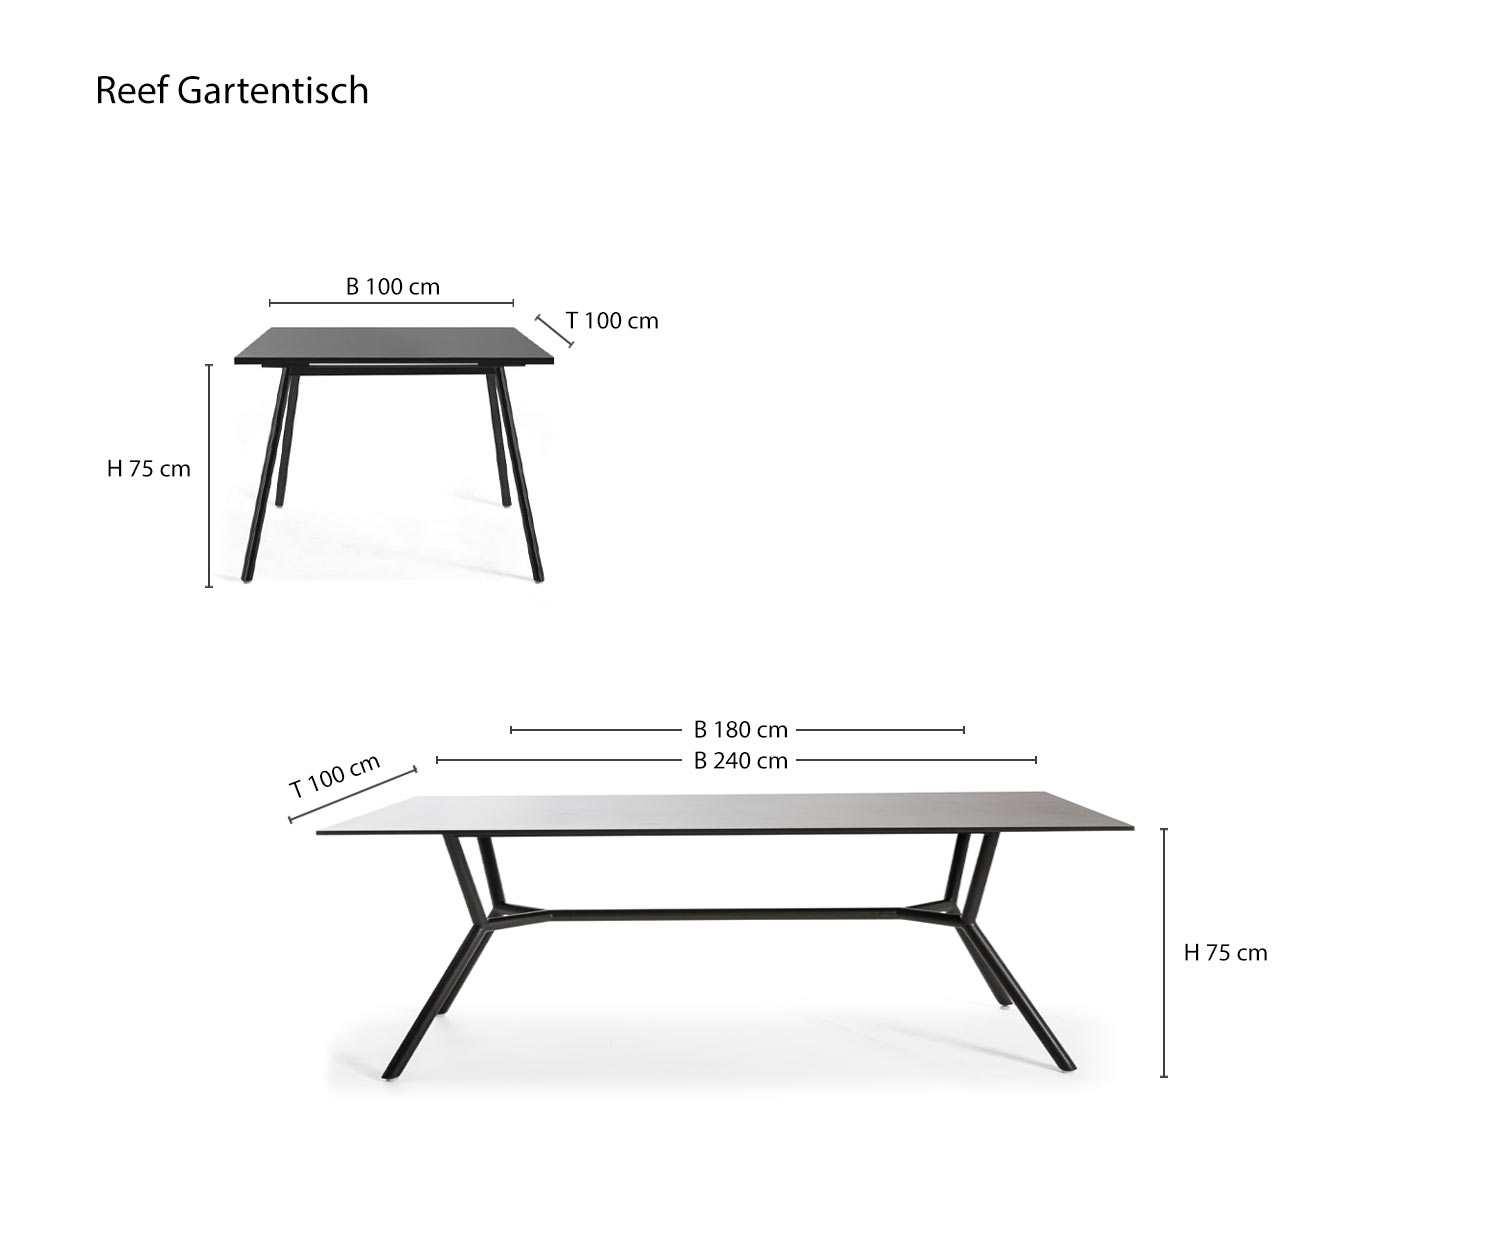 Oasiq Reef garden designer dining table sketch dimensions sizes dimensions